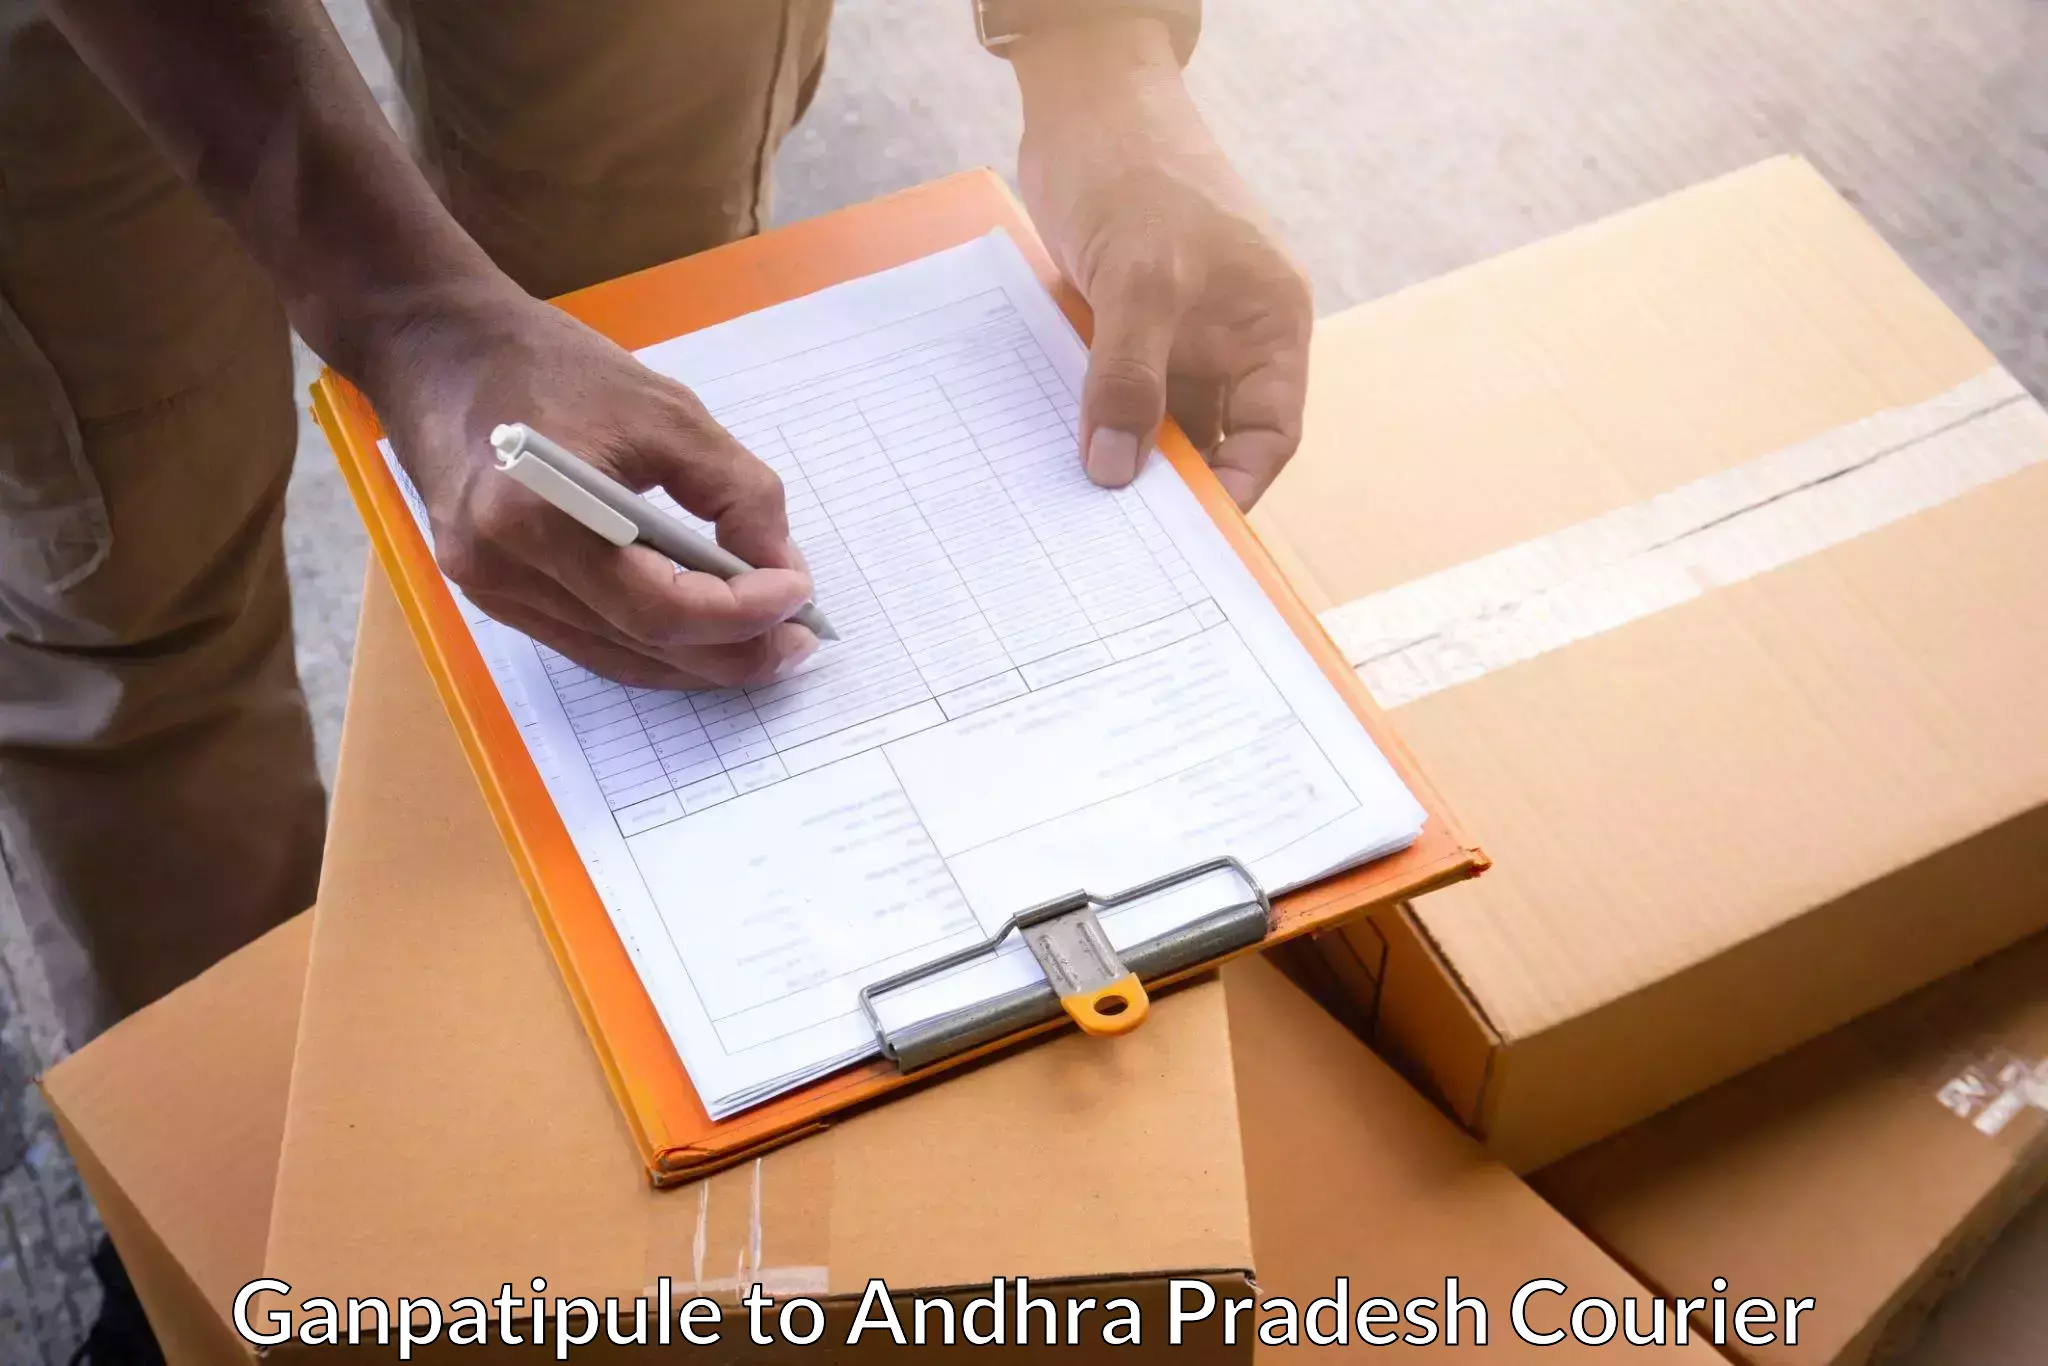 Delivery service partnership in Ganpatipule to Srikakulam